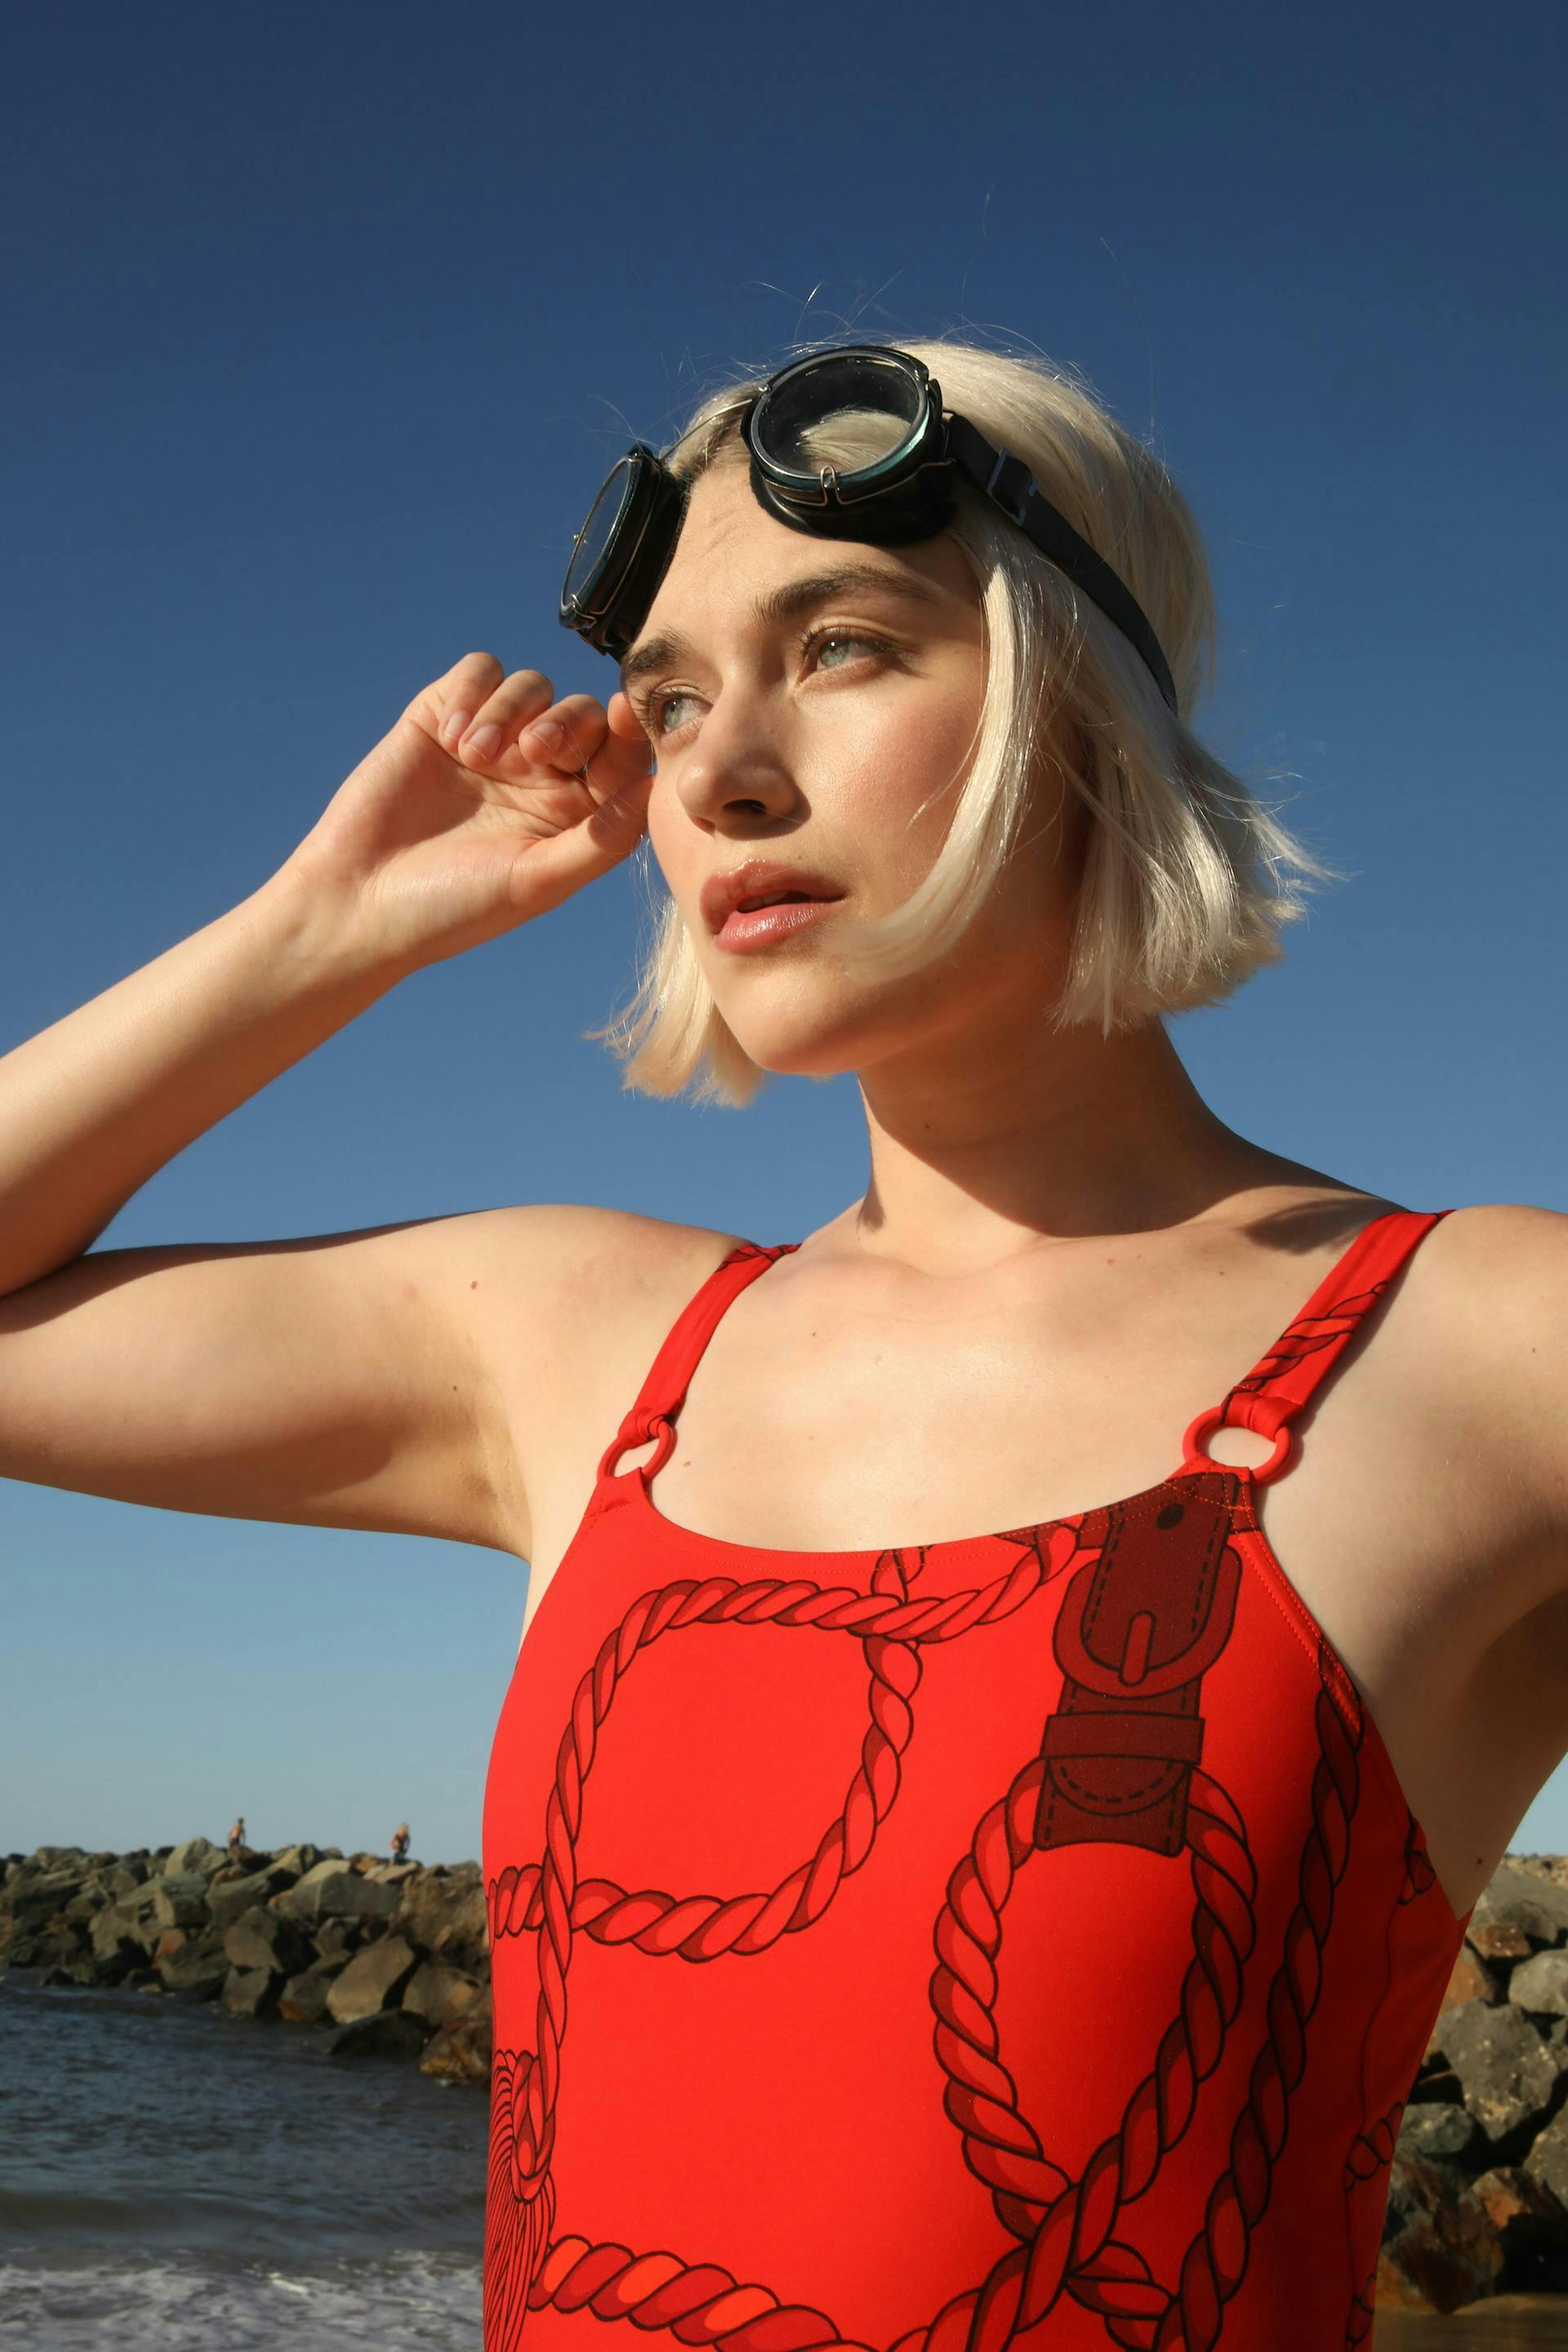 clothing apparel sunglasses accessories accessory person human goggles finger swimwear